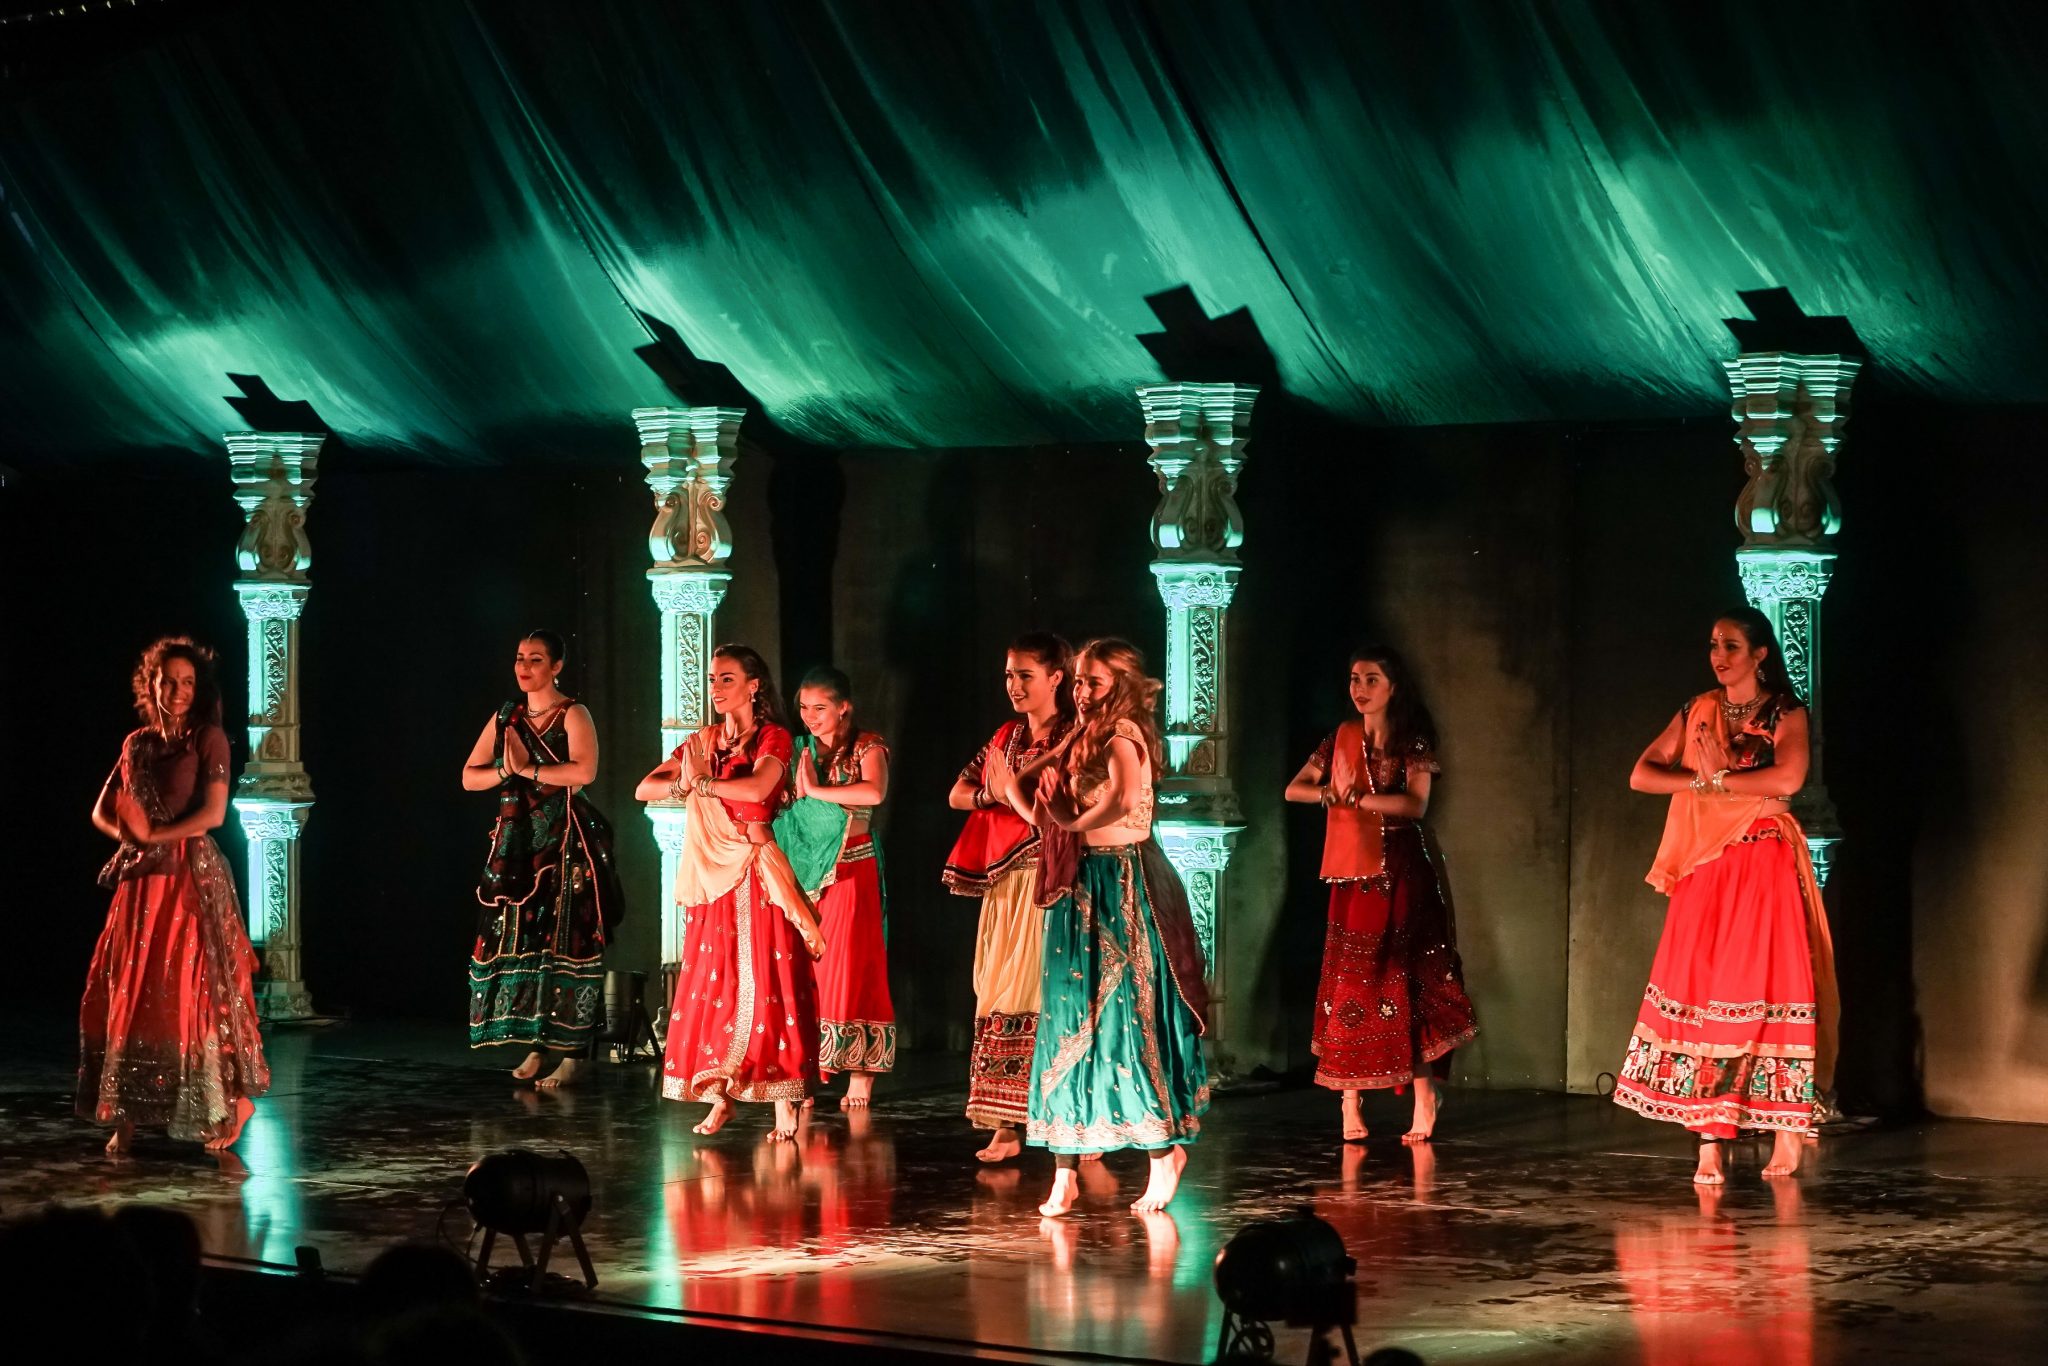 Girls in Hindu costumes dancing